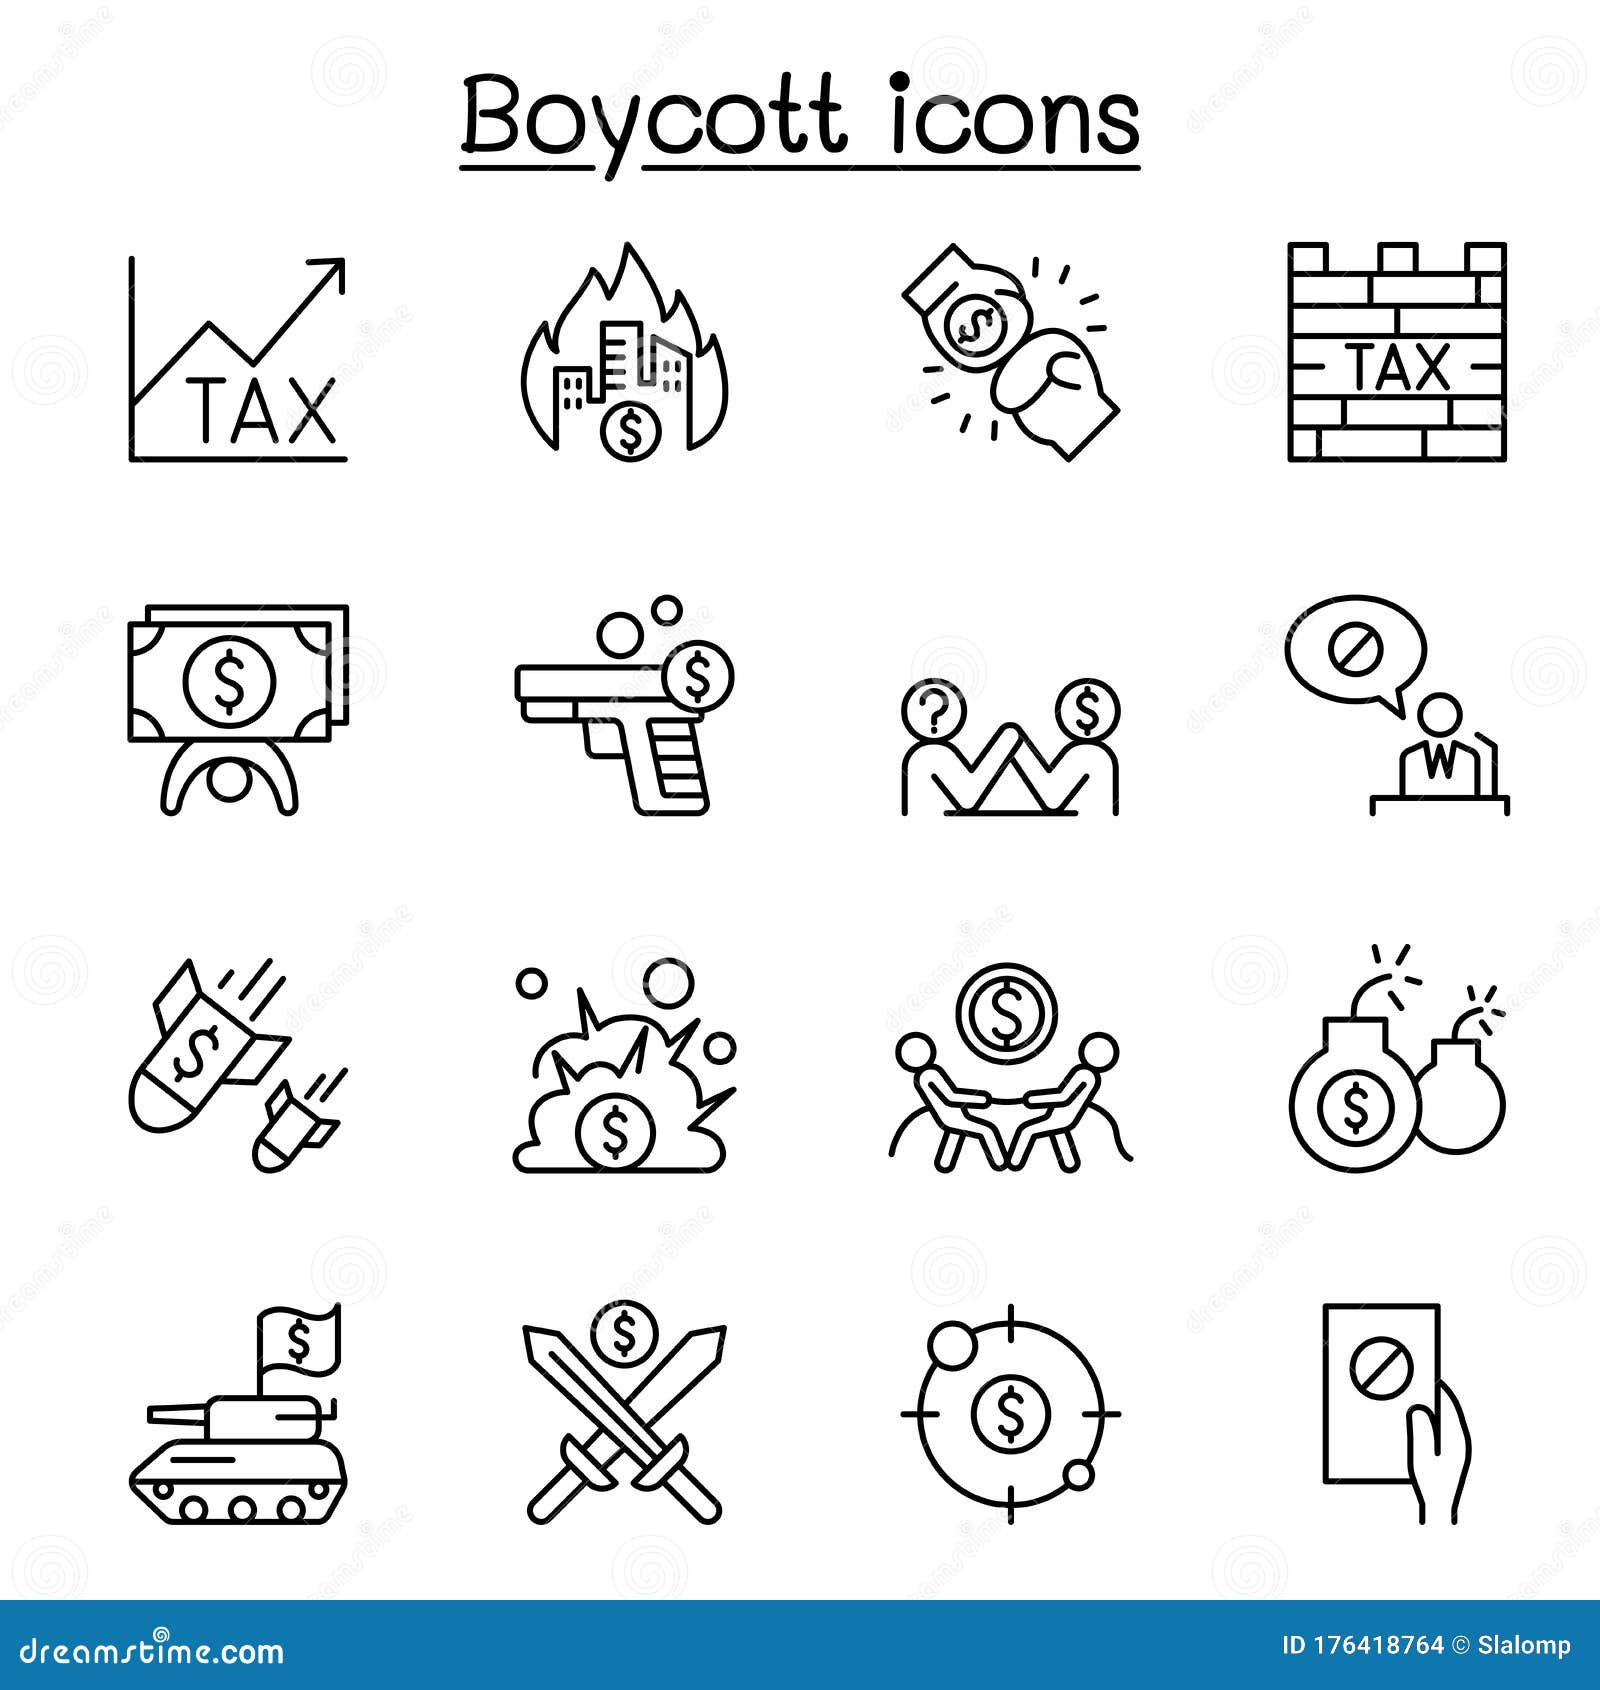 boycott, business war, trade war icon set in thin line style